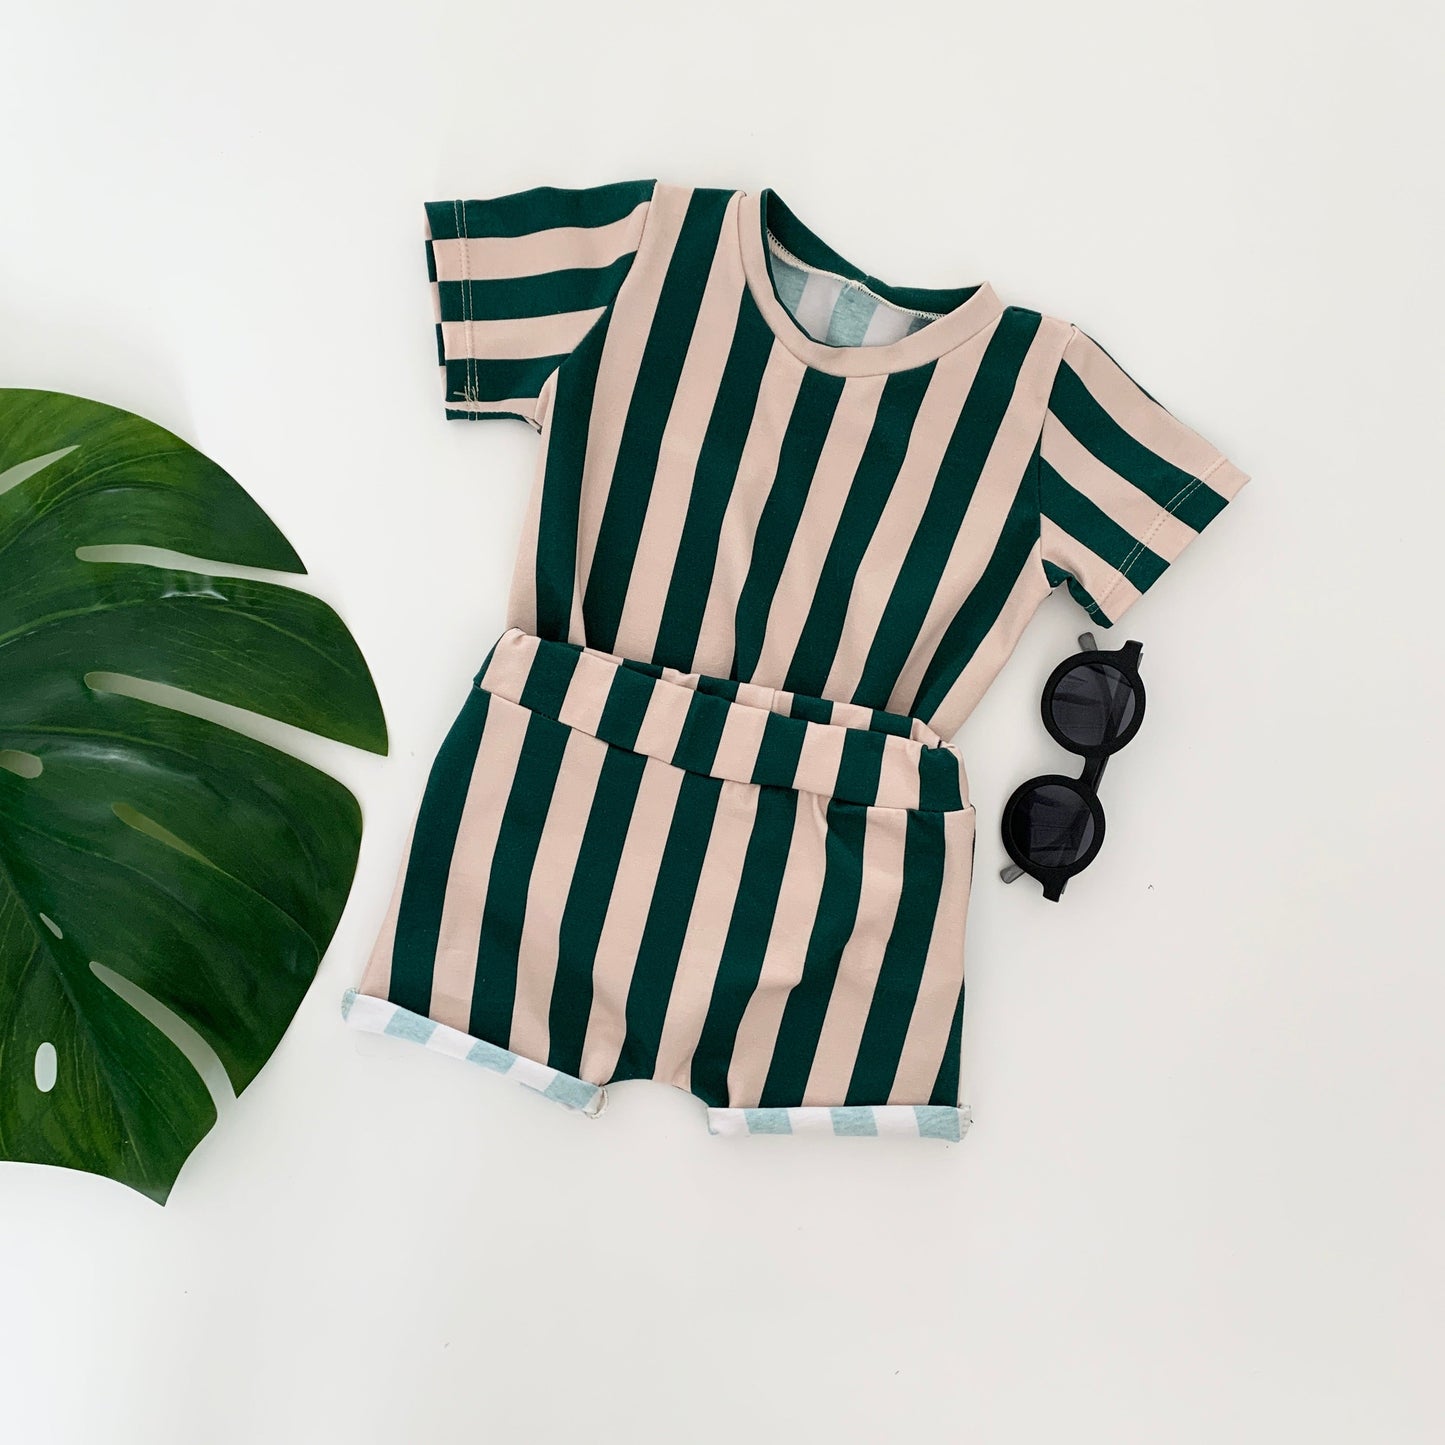 Green Striped Children’s T-Shirt Size 1-2